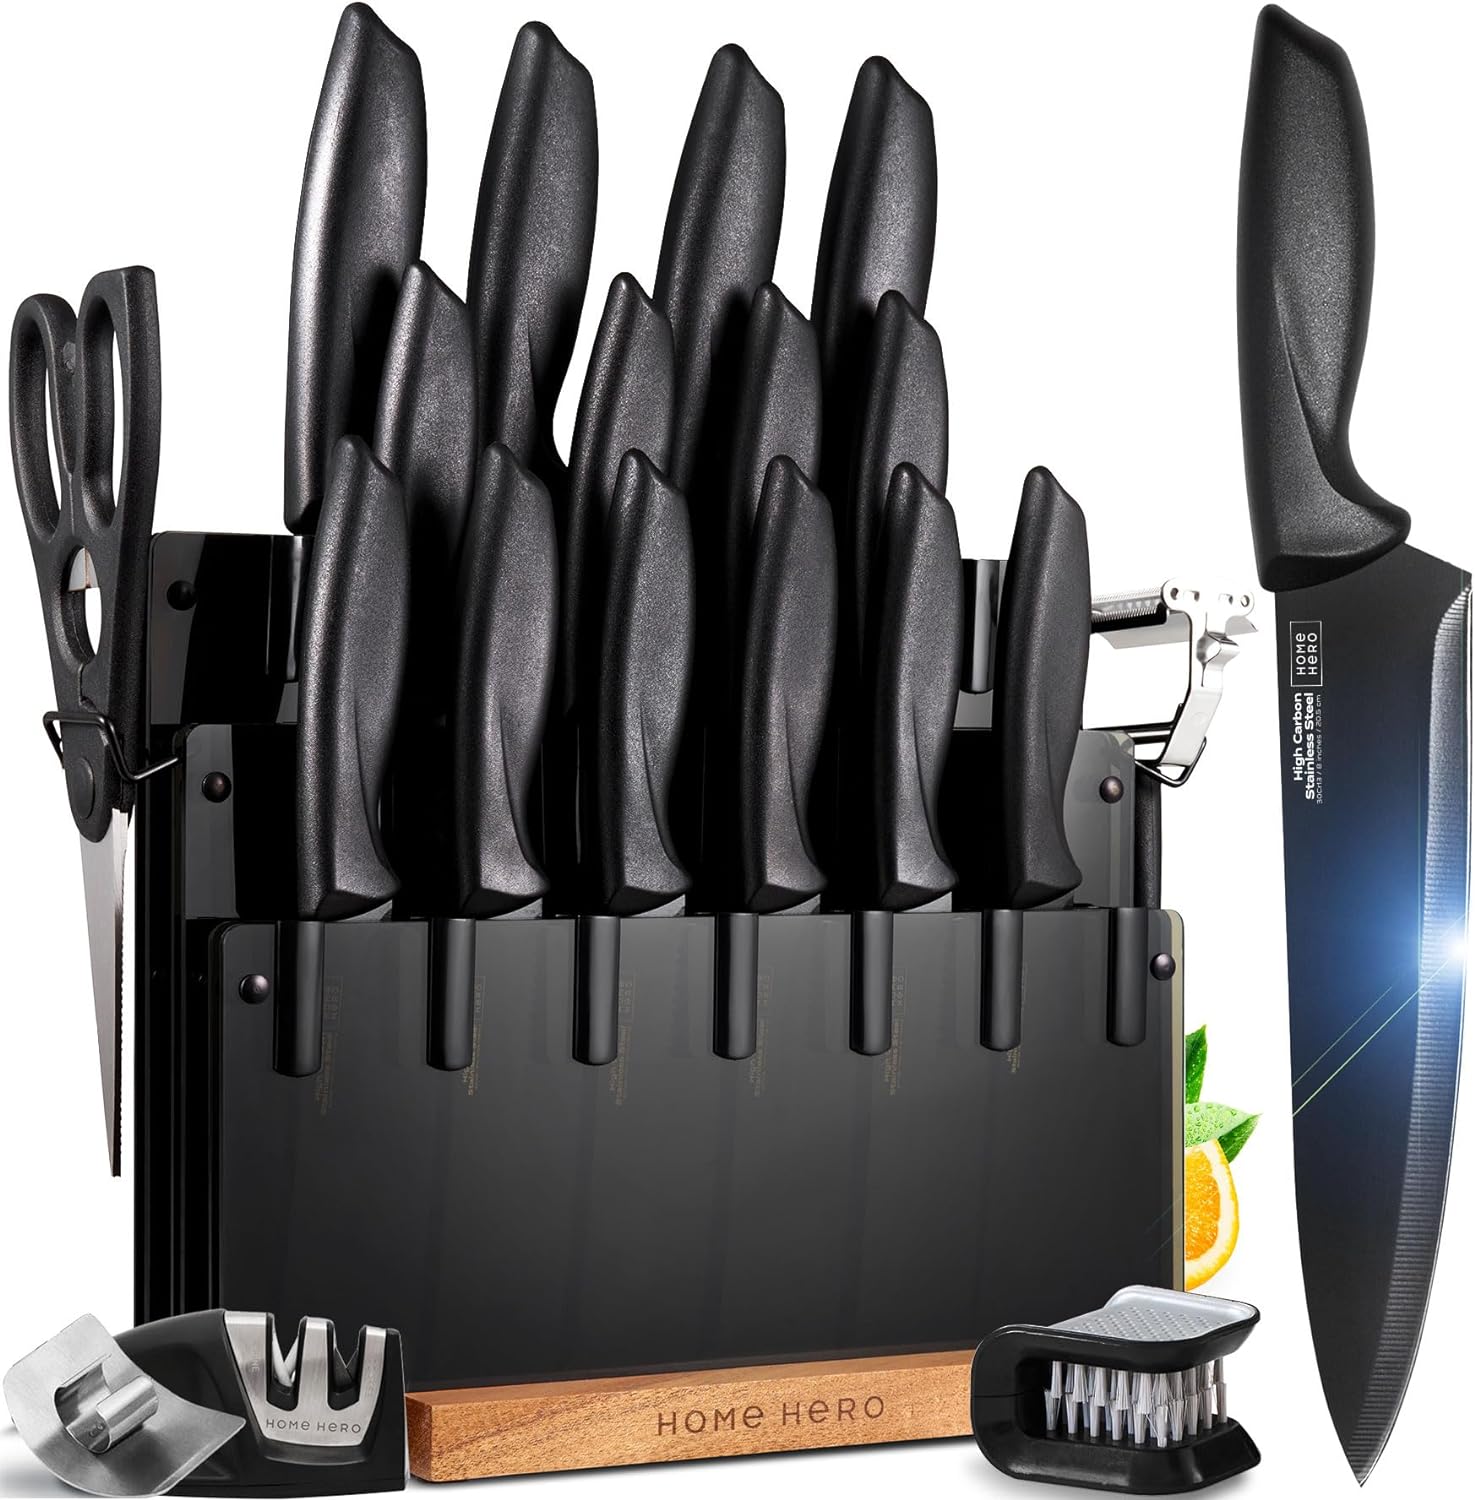 Home Hero Kitchen Knife Set with Sharpener – High Carbon Stainless Steel Knife Block Set with Ergonomic Handles (20 Pcs – Black)